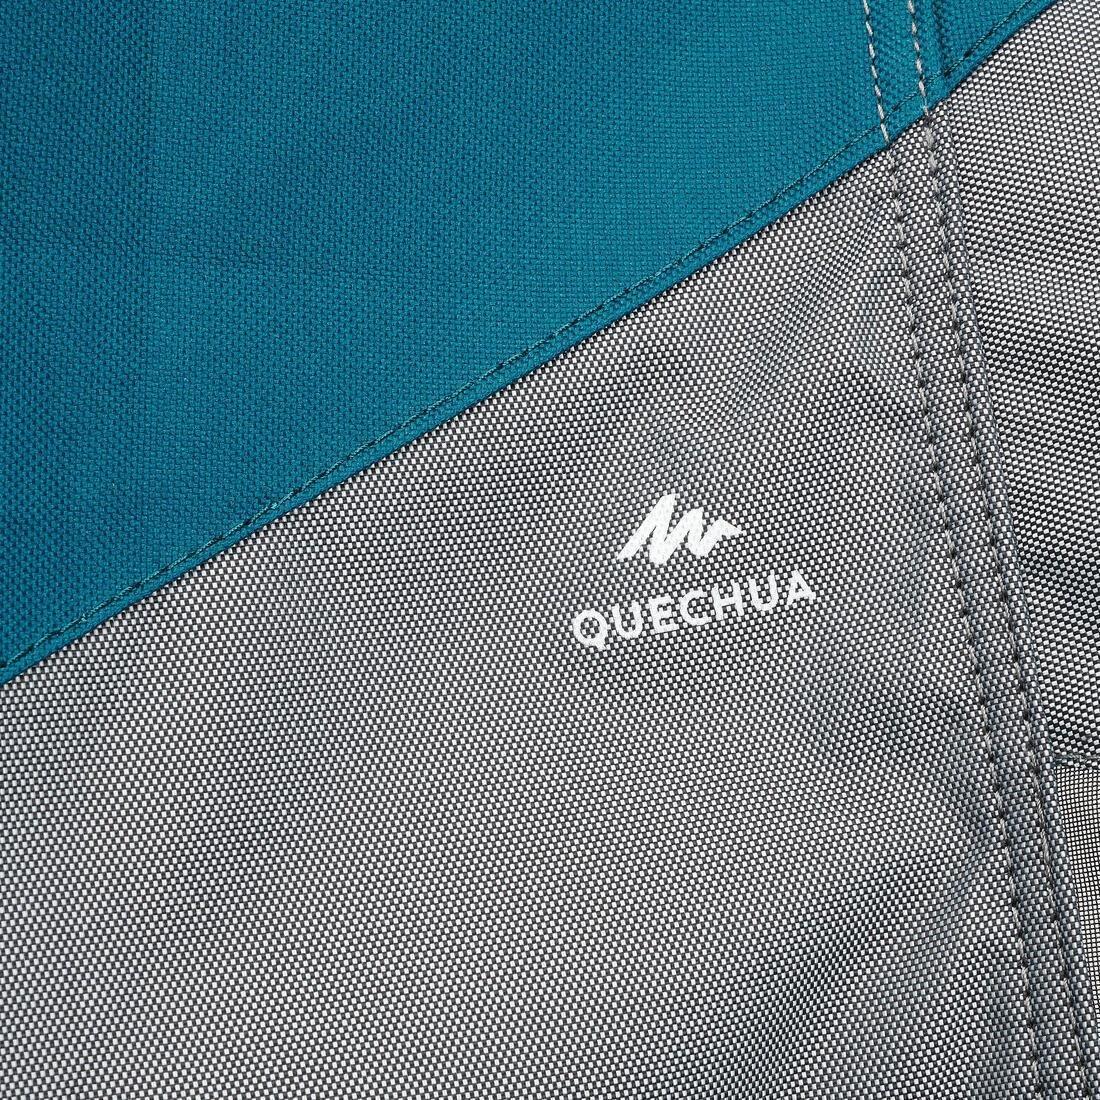 QUECHUA - Xl Folding Camping Chair - Mh500, Grey